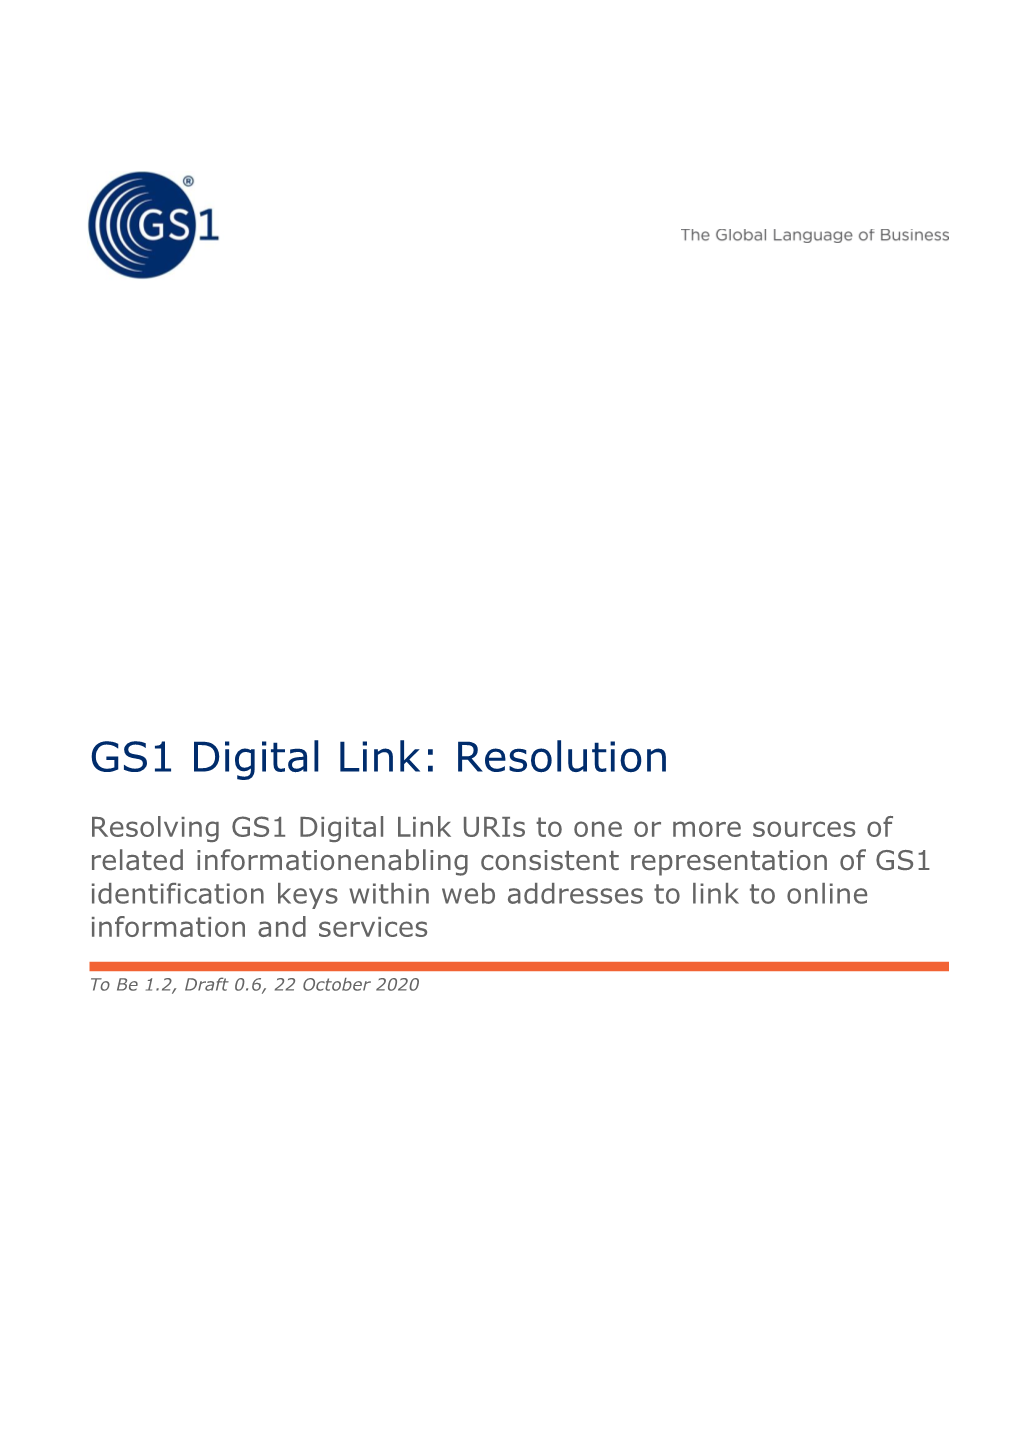 GS1 Digital Link: Resolution